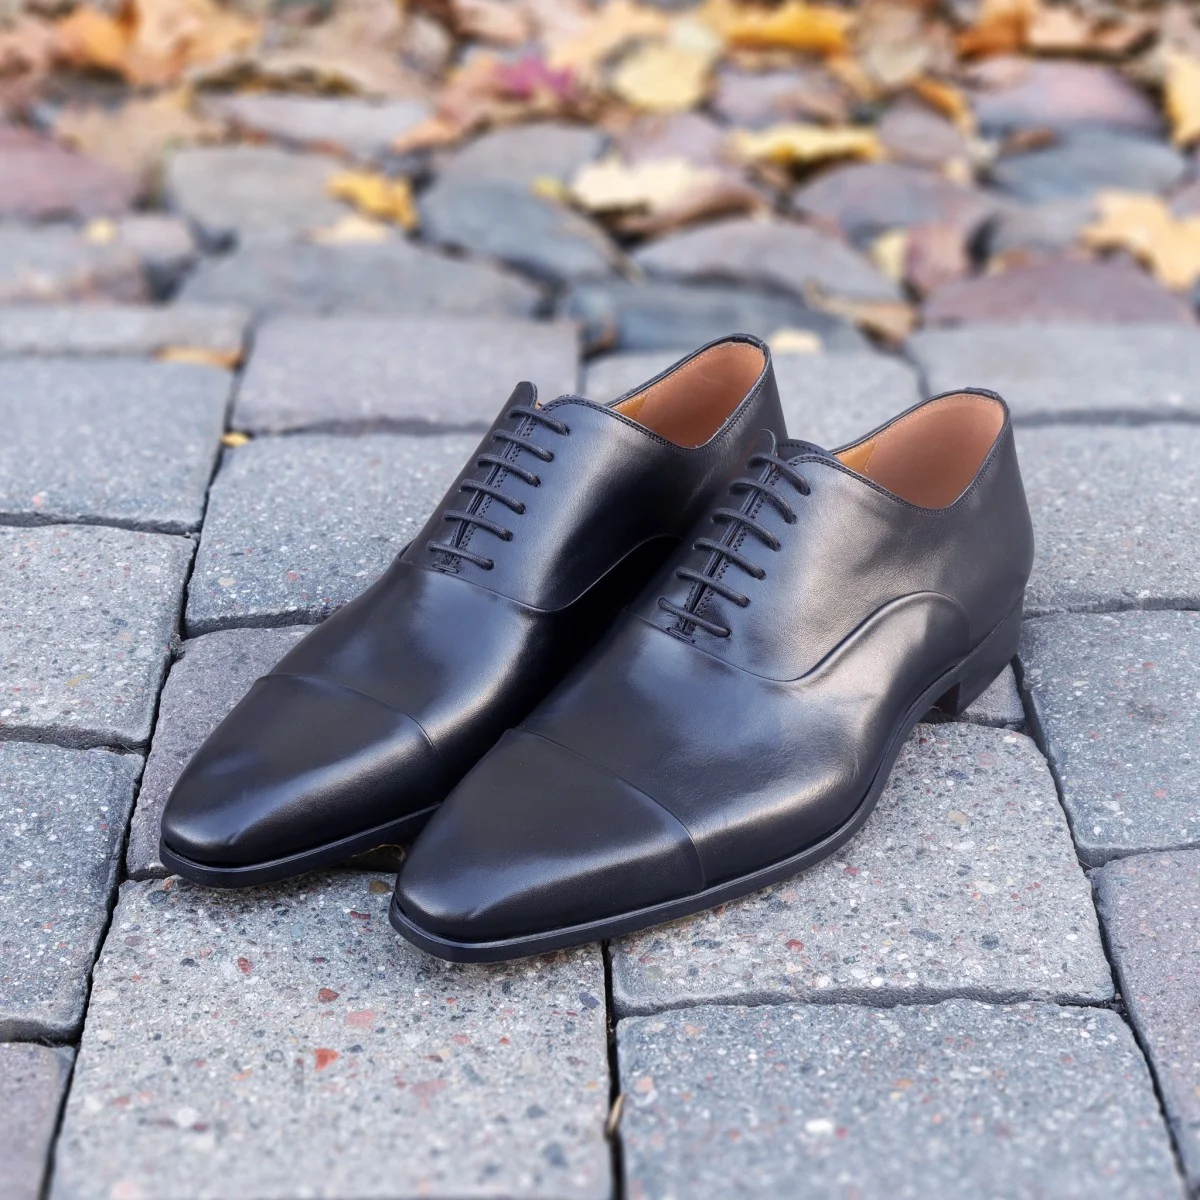 Magnanni Milos / Corey black toe cap oxford shoes